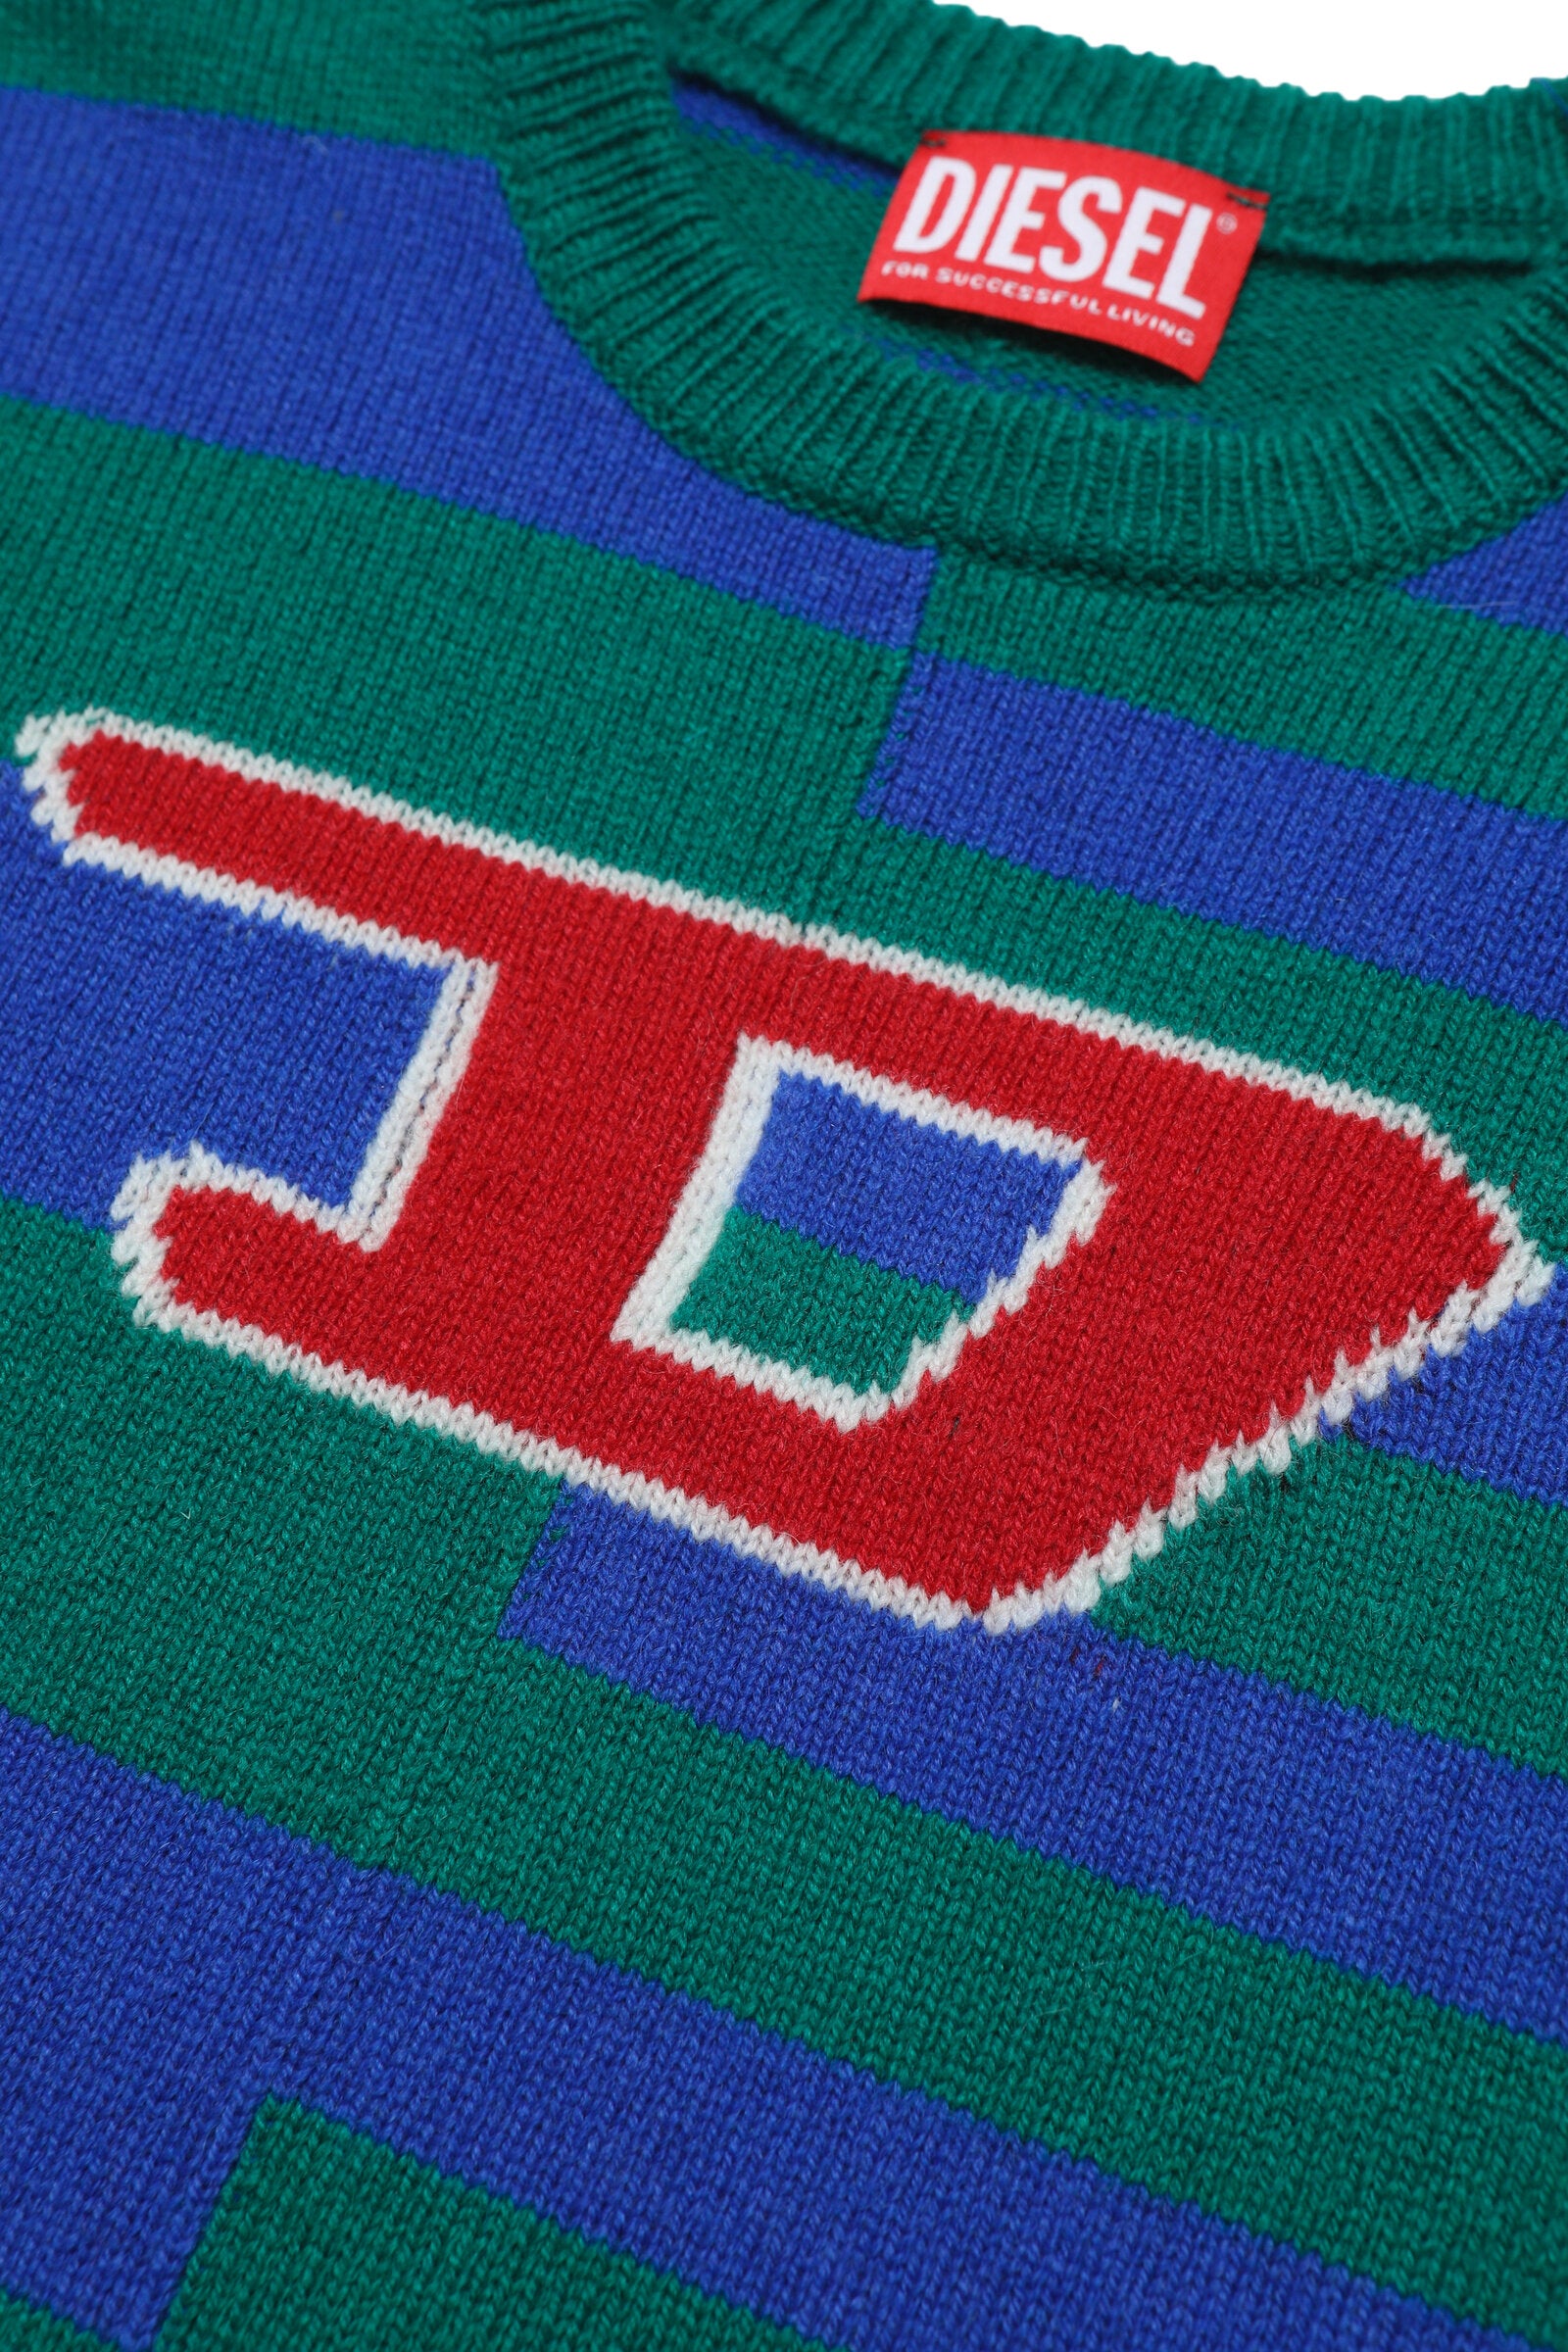 Wool-blend striped logo sweater